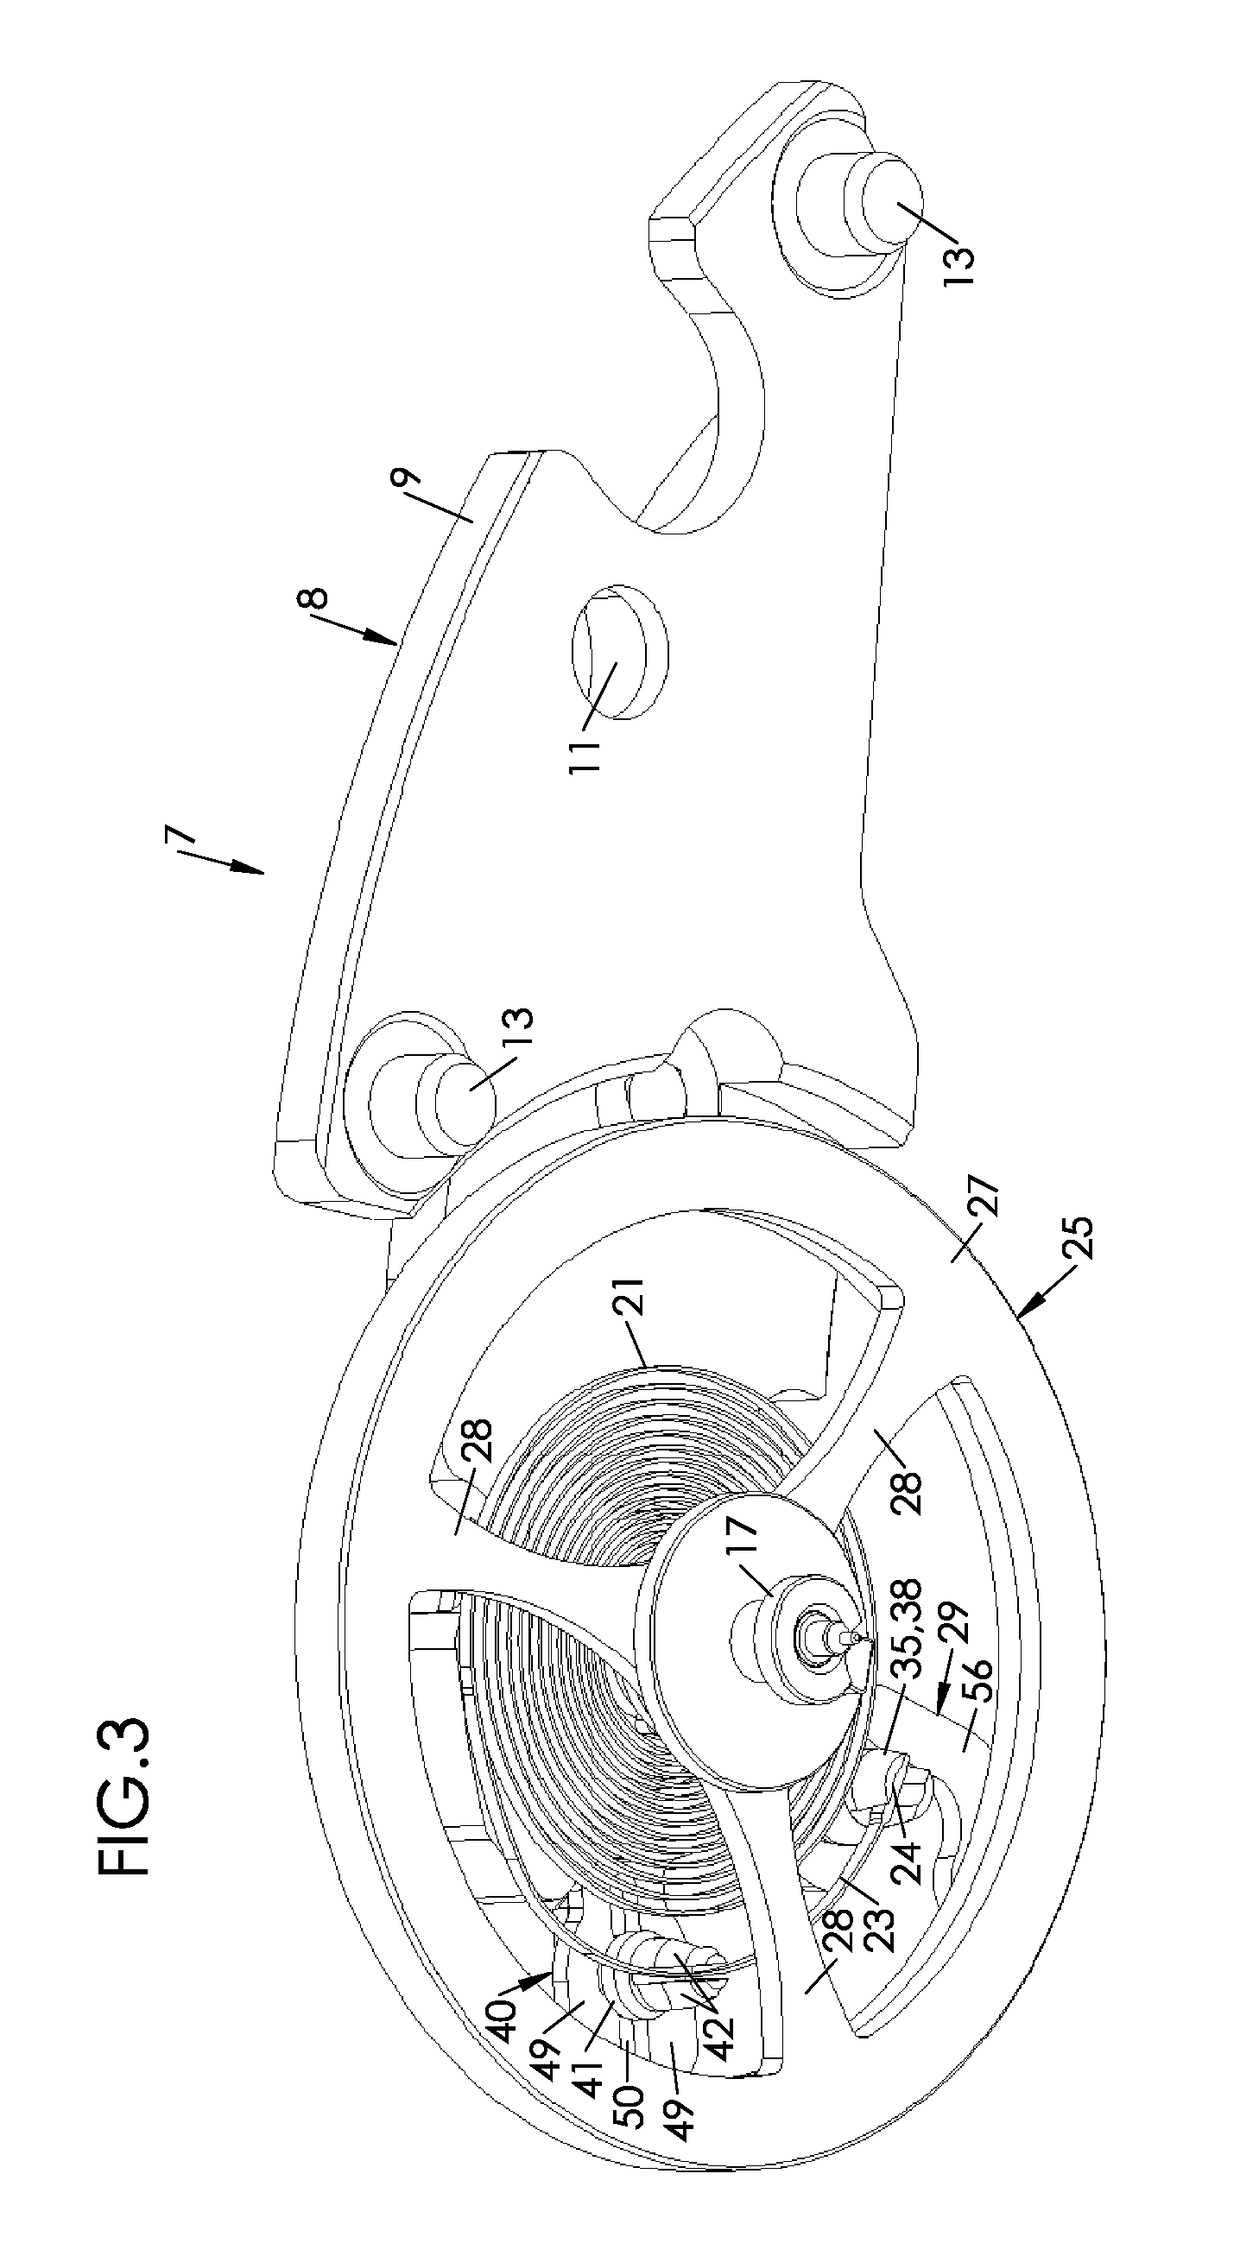 Balance-spring stud-holder for a mechanical timepiece movement